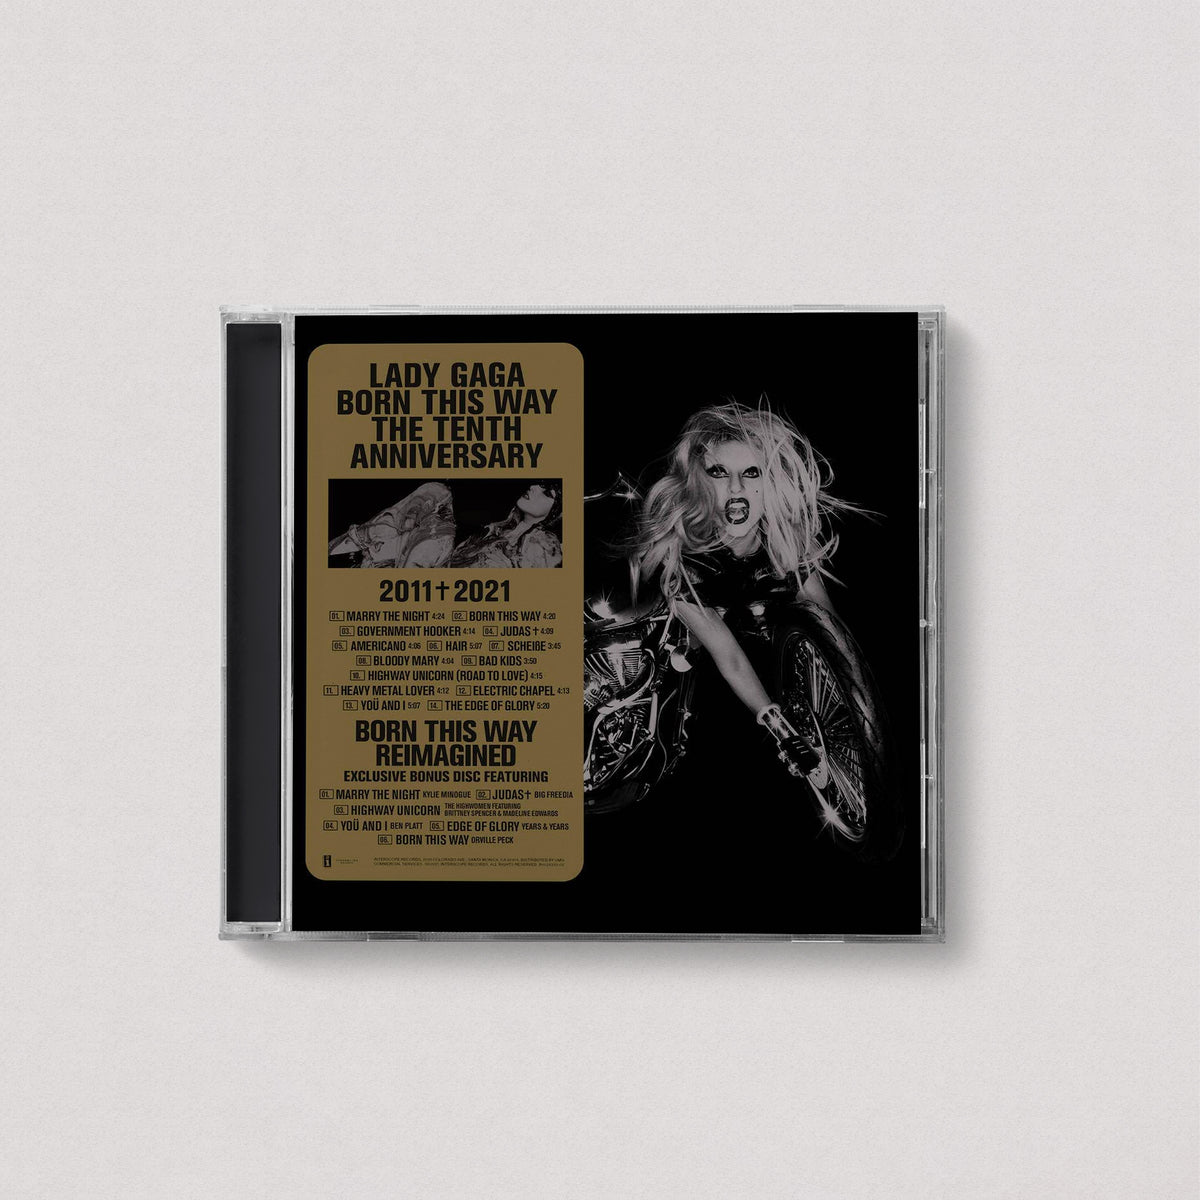 Lady Gaga - Born This Way "The Tenth Anniversary" (2CD)